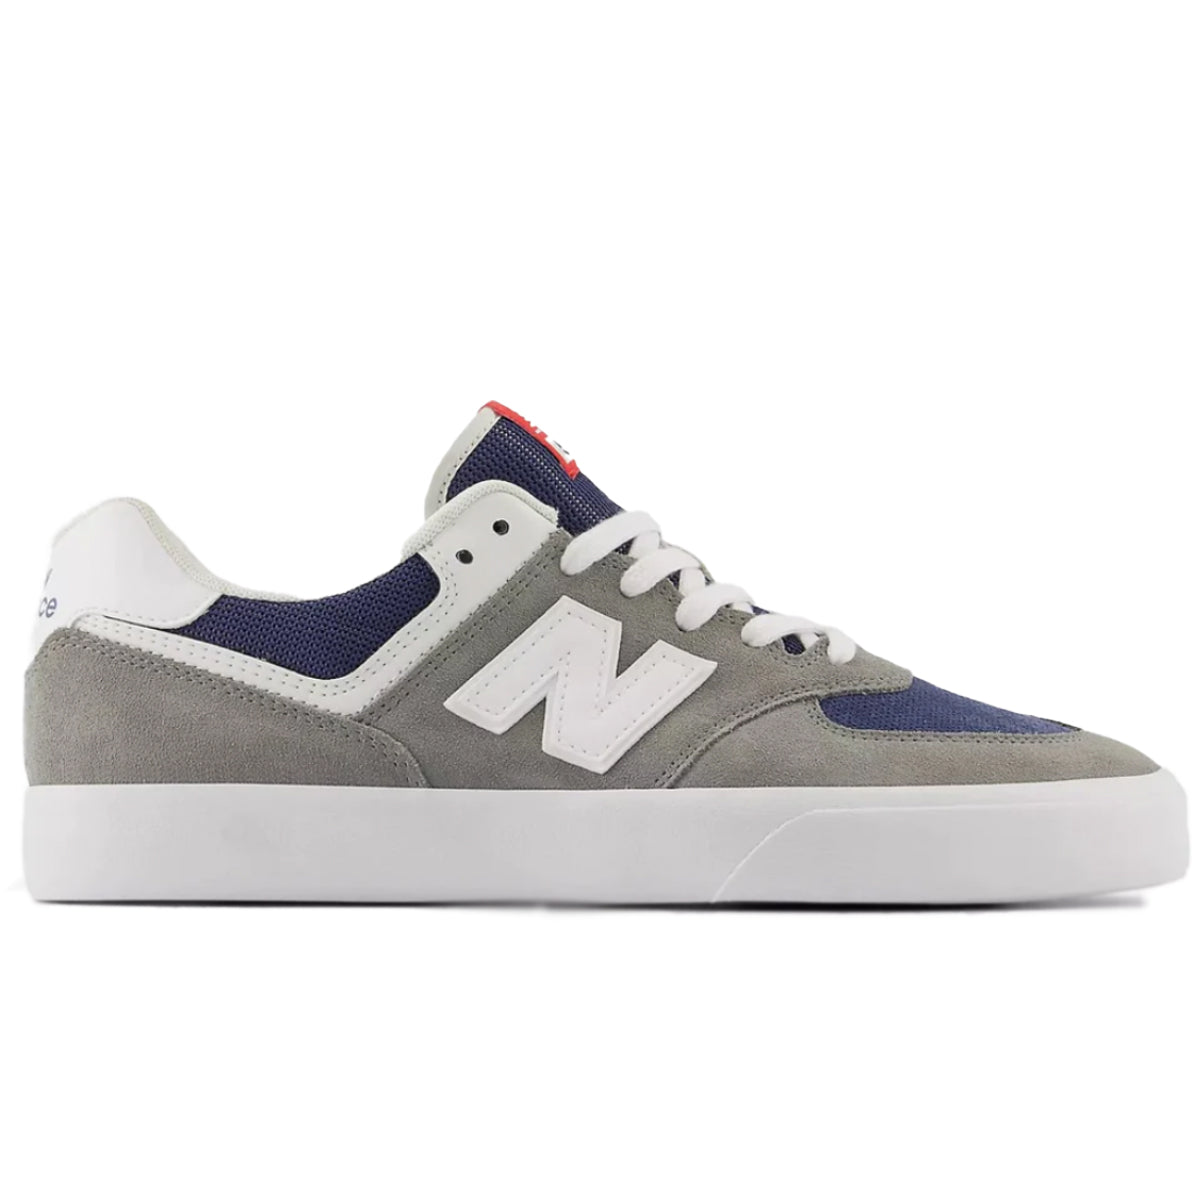 New Balance Numeric NM574VGW Vulc Grey/White - Orchard Skateshop